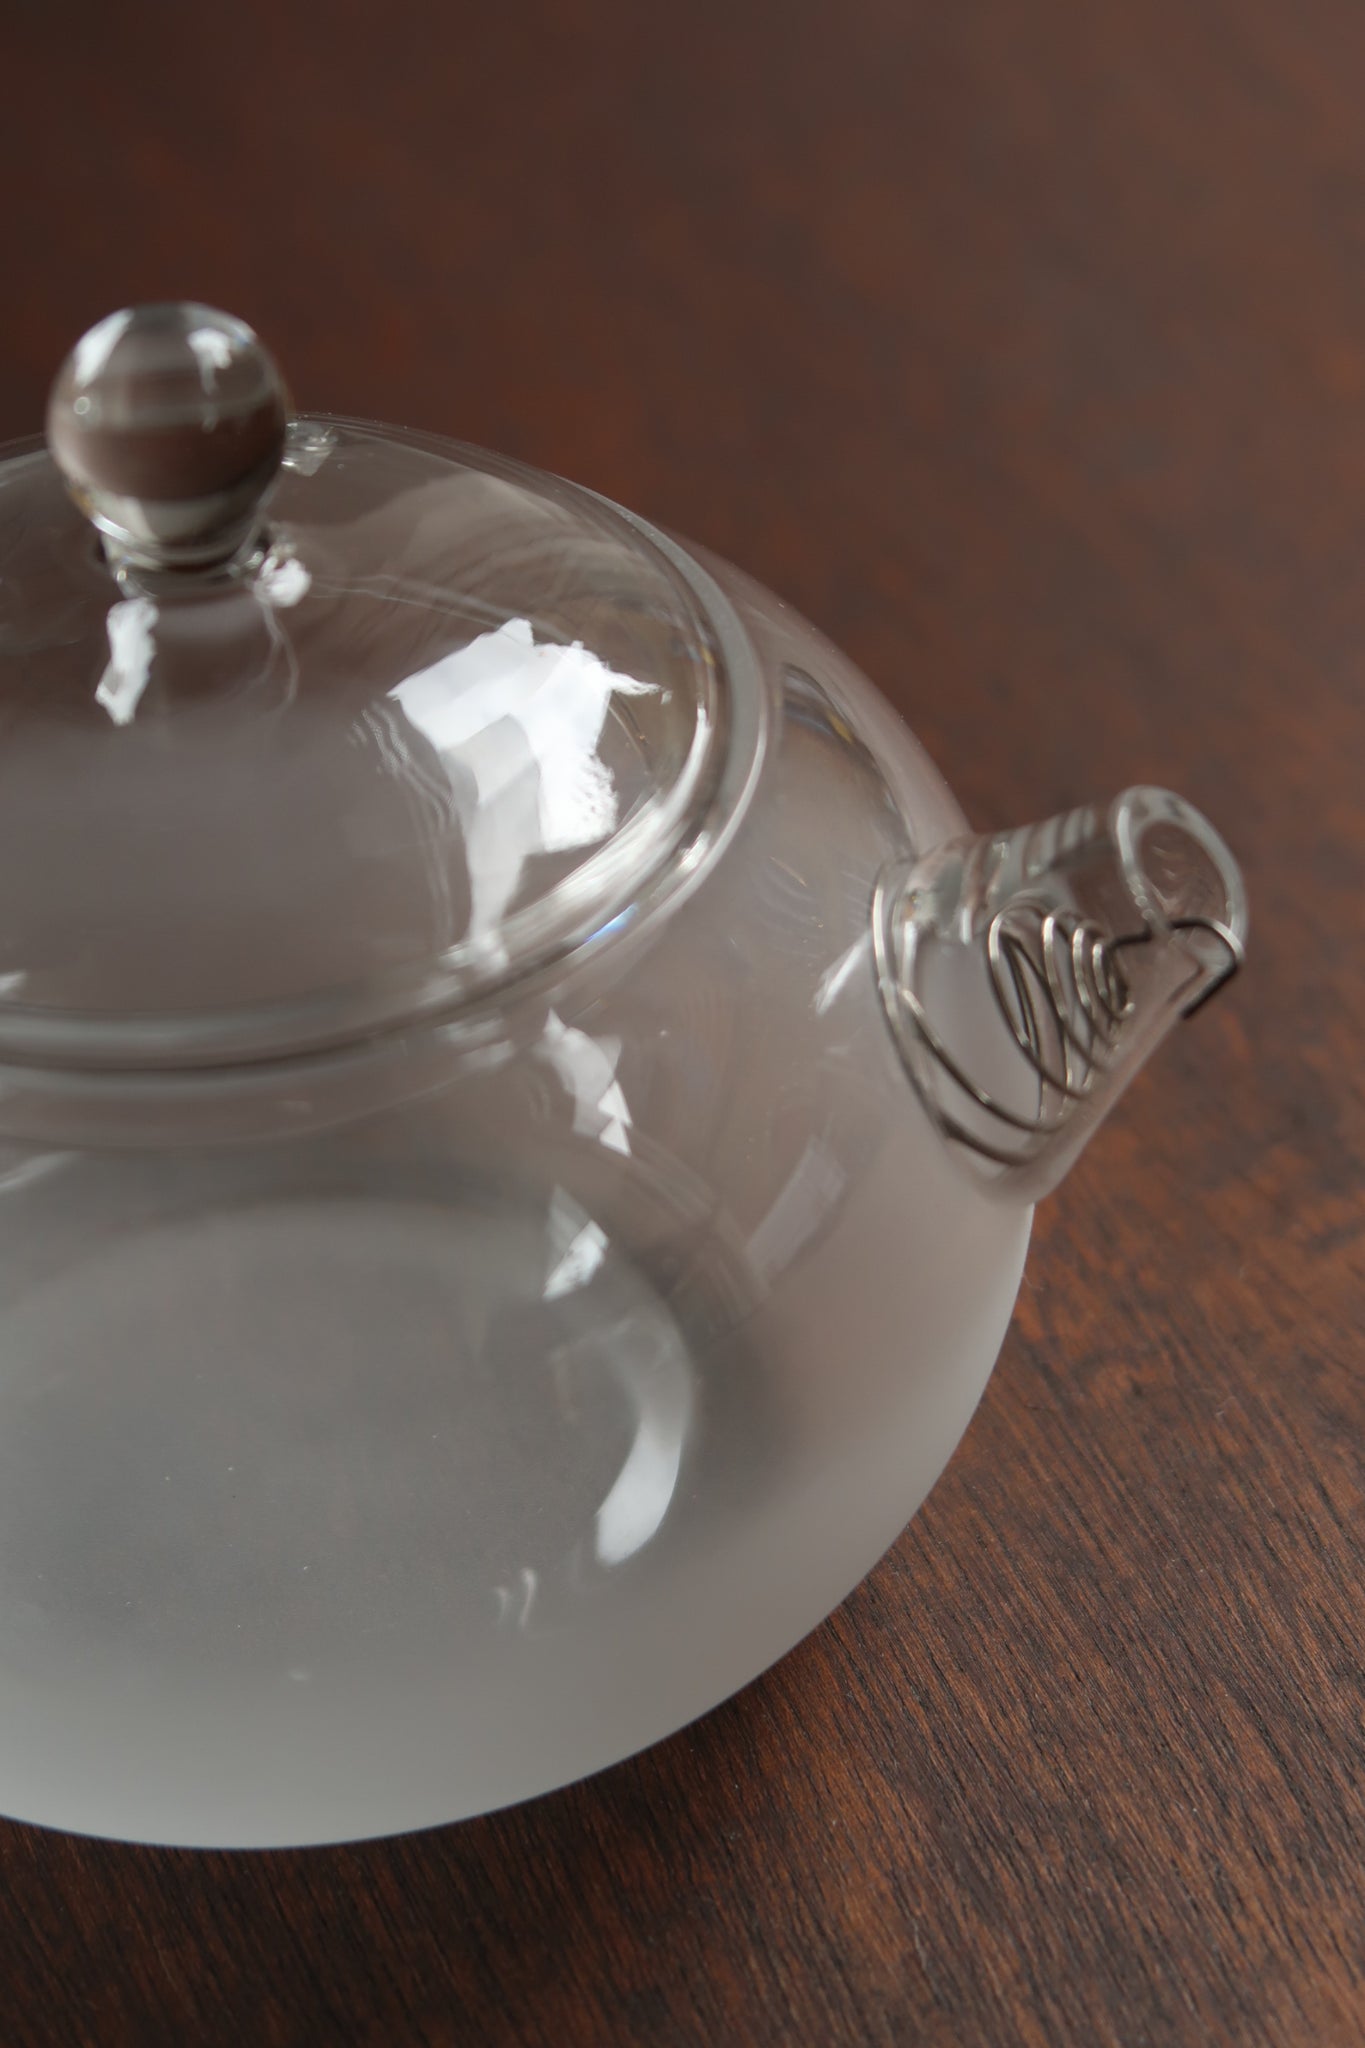 Small Glass Teapot